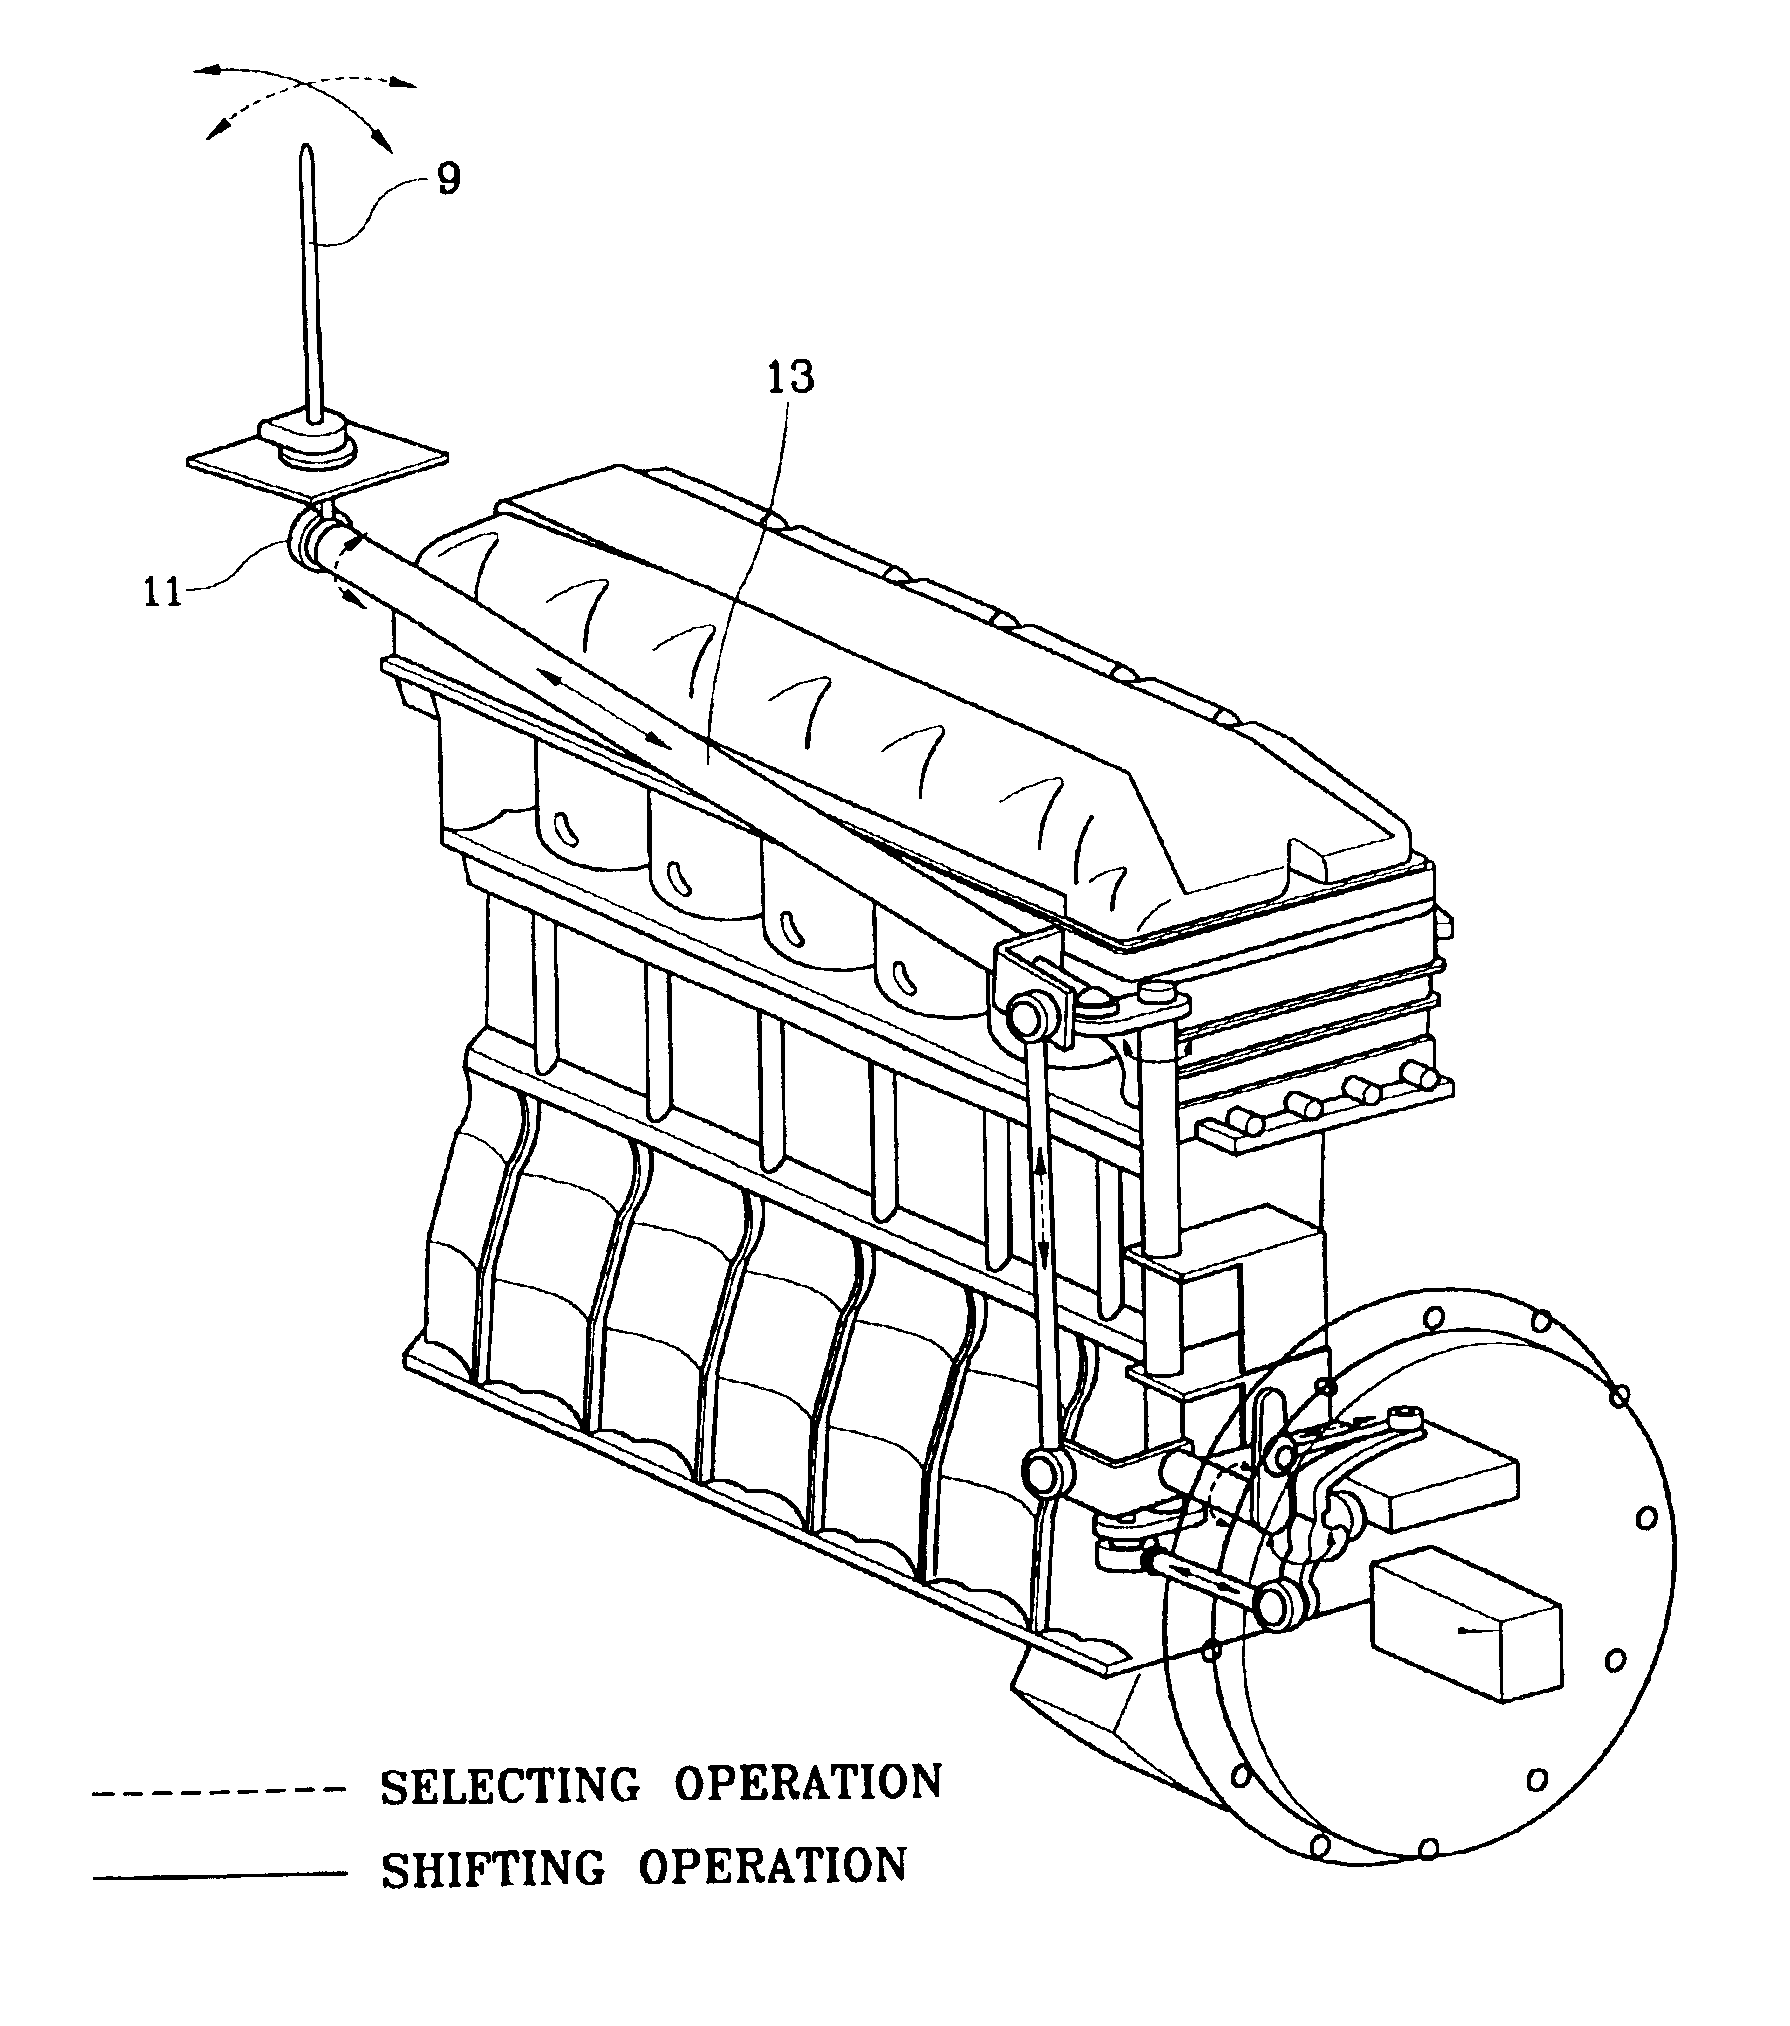 Manual transmission shifting device